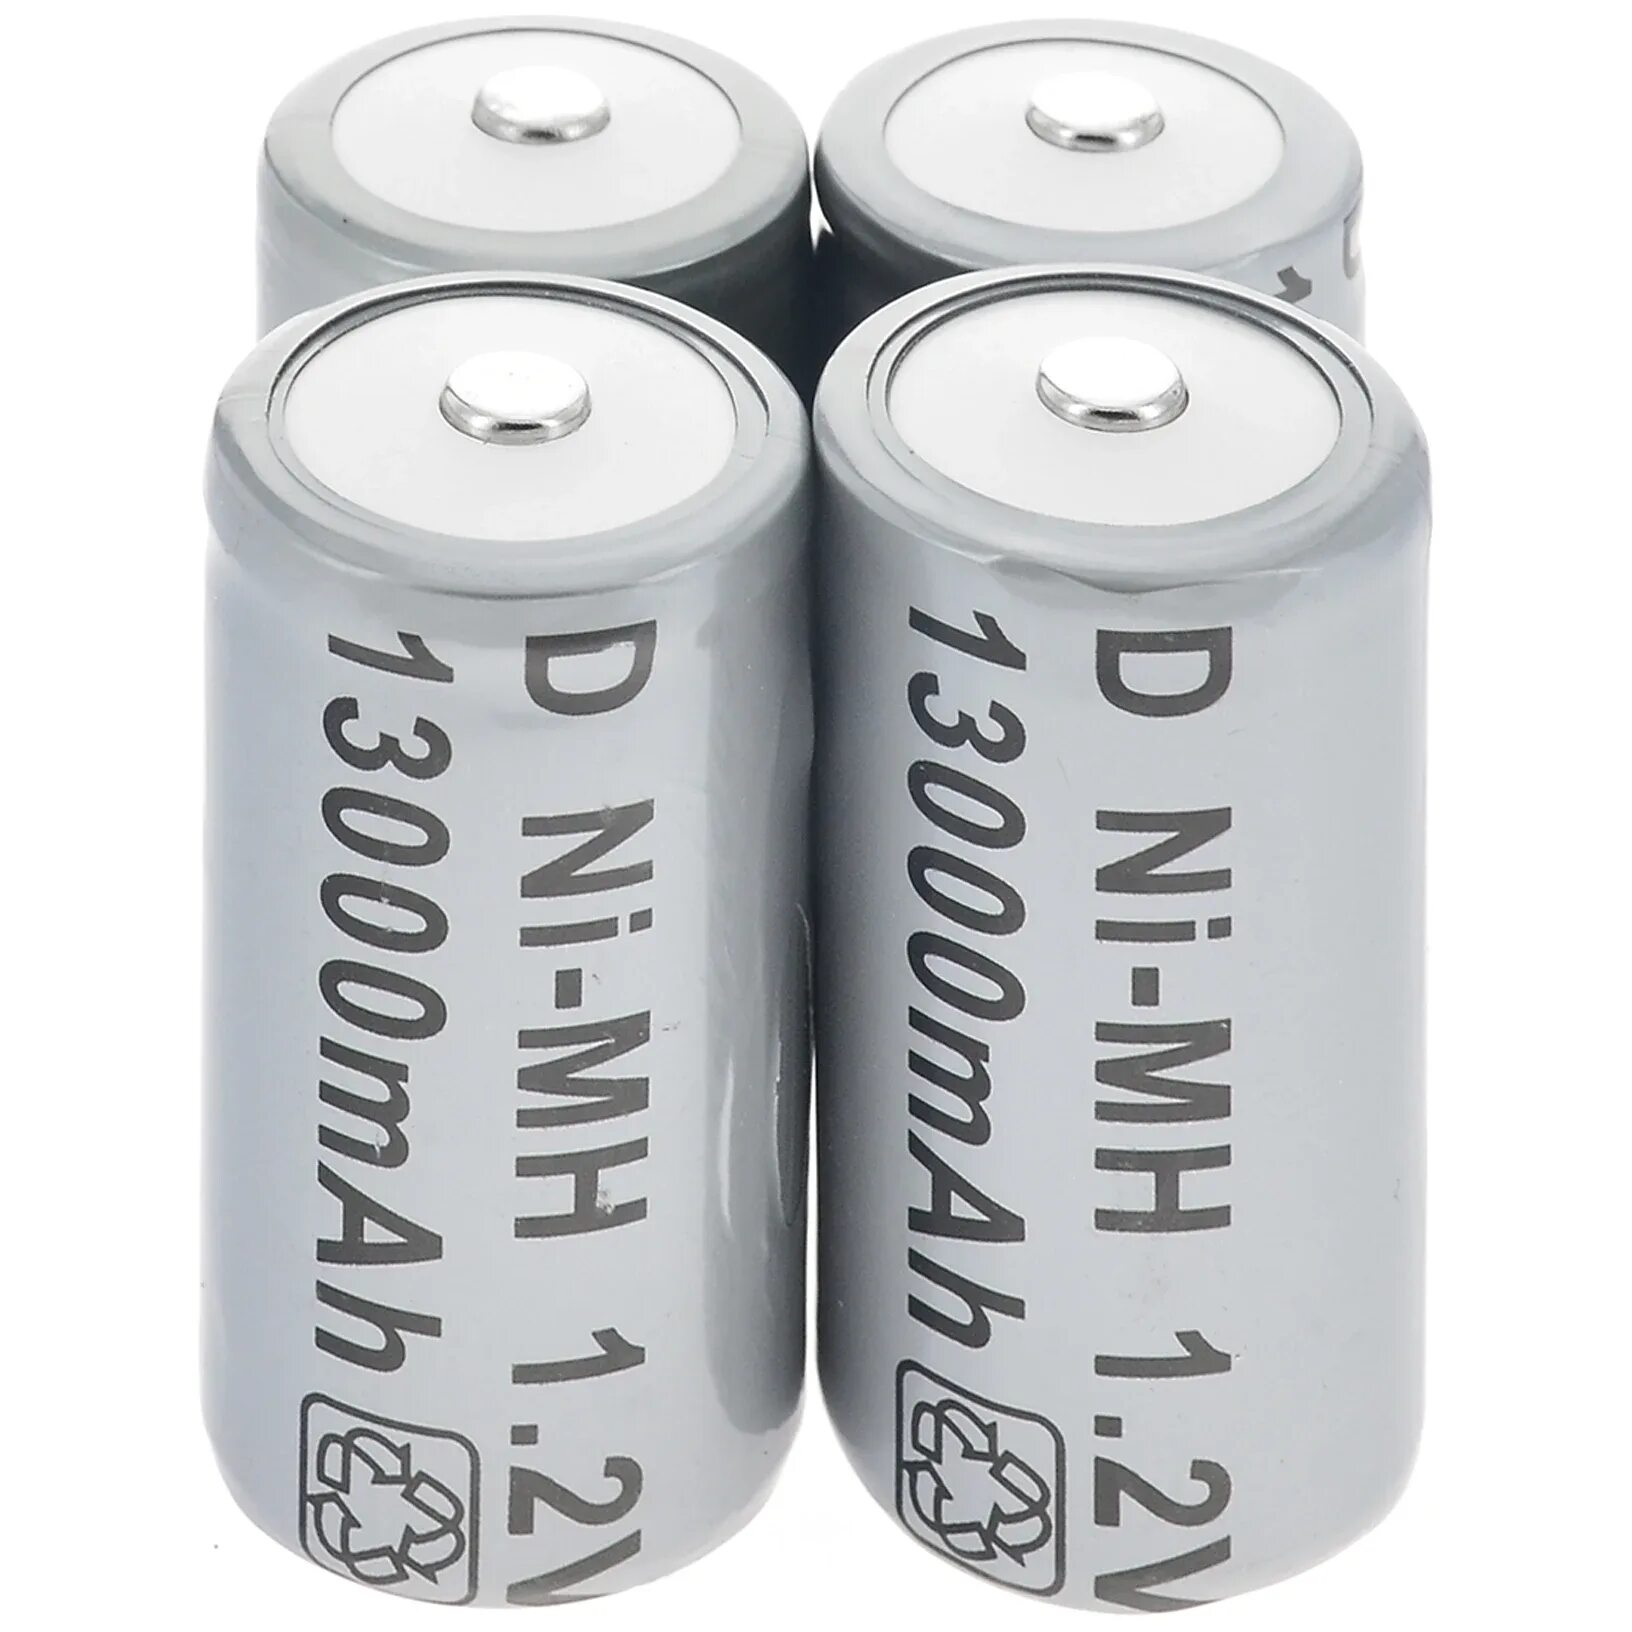 Батареи никель металлогидридные 1.2v 3000mah. Батарейка аккумуляторная d2. Никель-металлогидридный аккумулятор. Никель-металлогидридный аккумулятор АА.